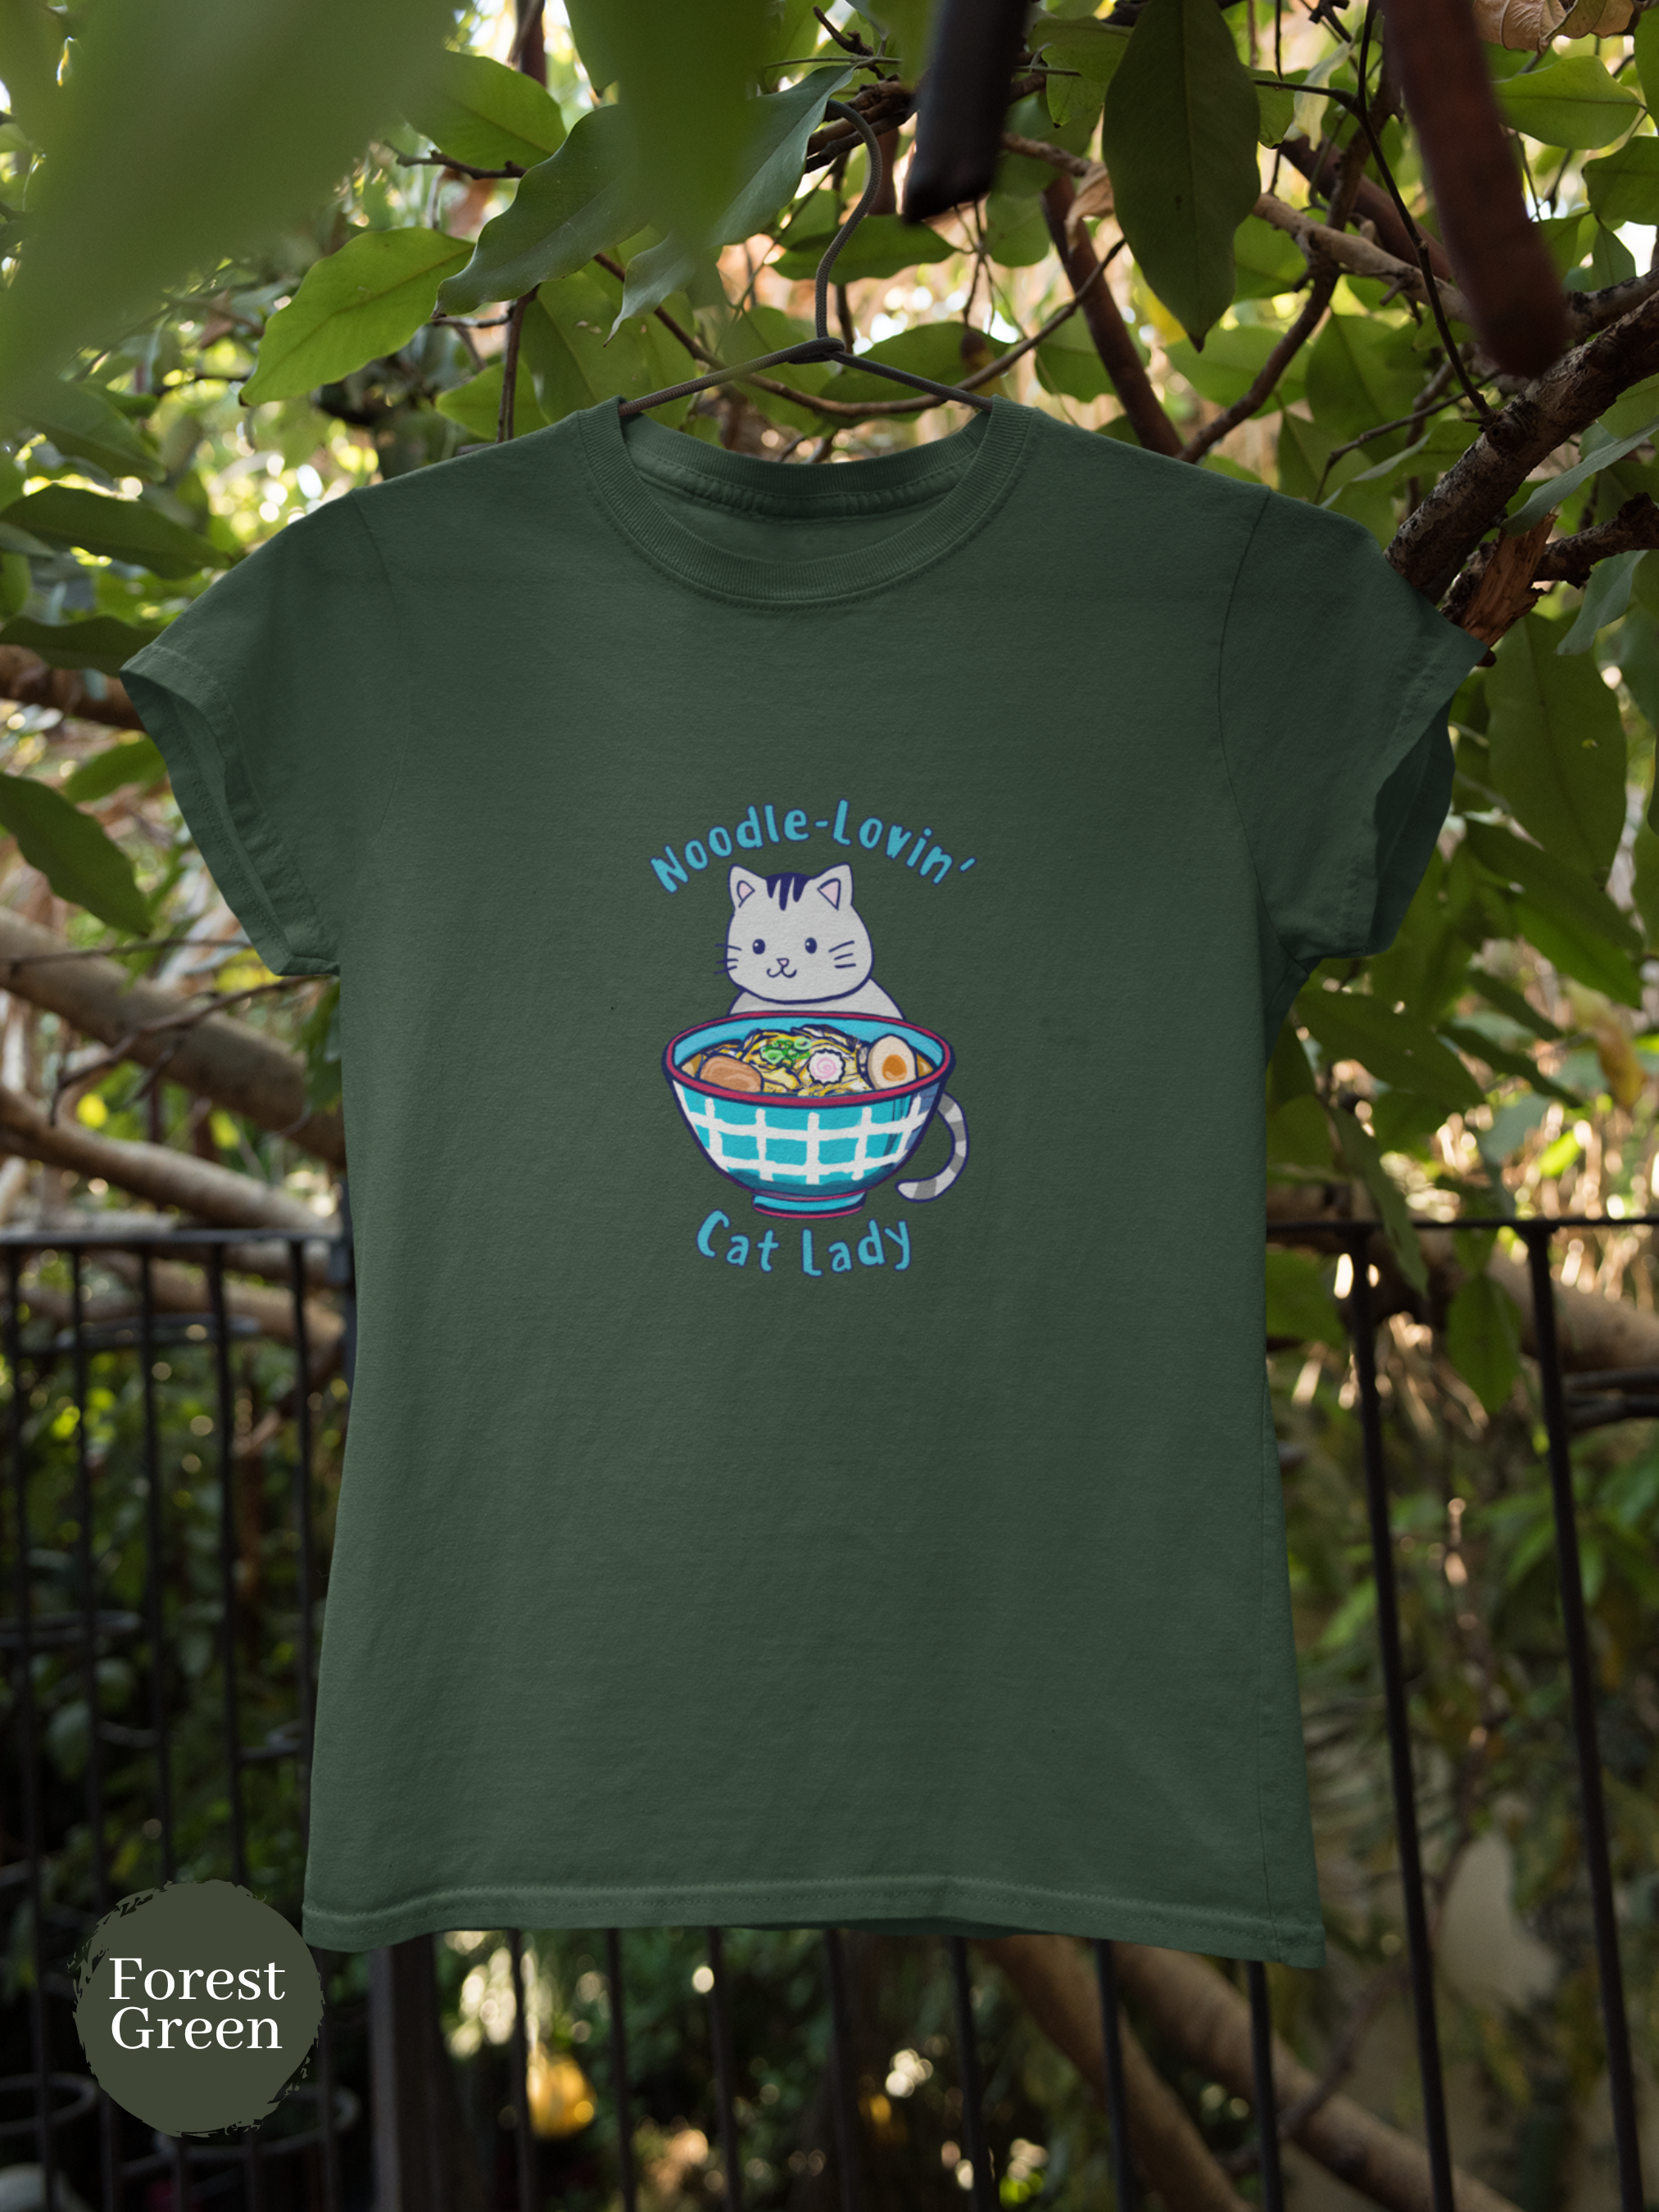 Ramen T-shirt with Cat: Japanese Foodie Shirt Featuring Noodle-Lovin' Cat Lady Ramen Art